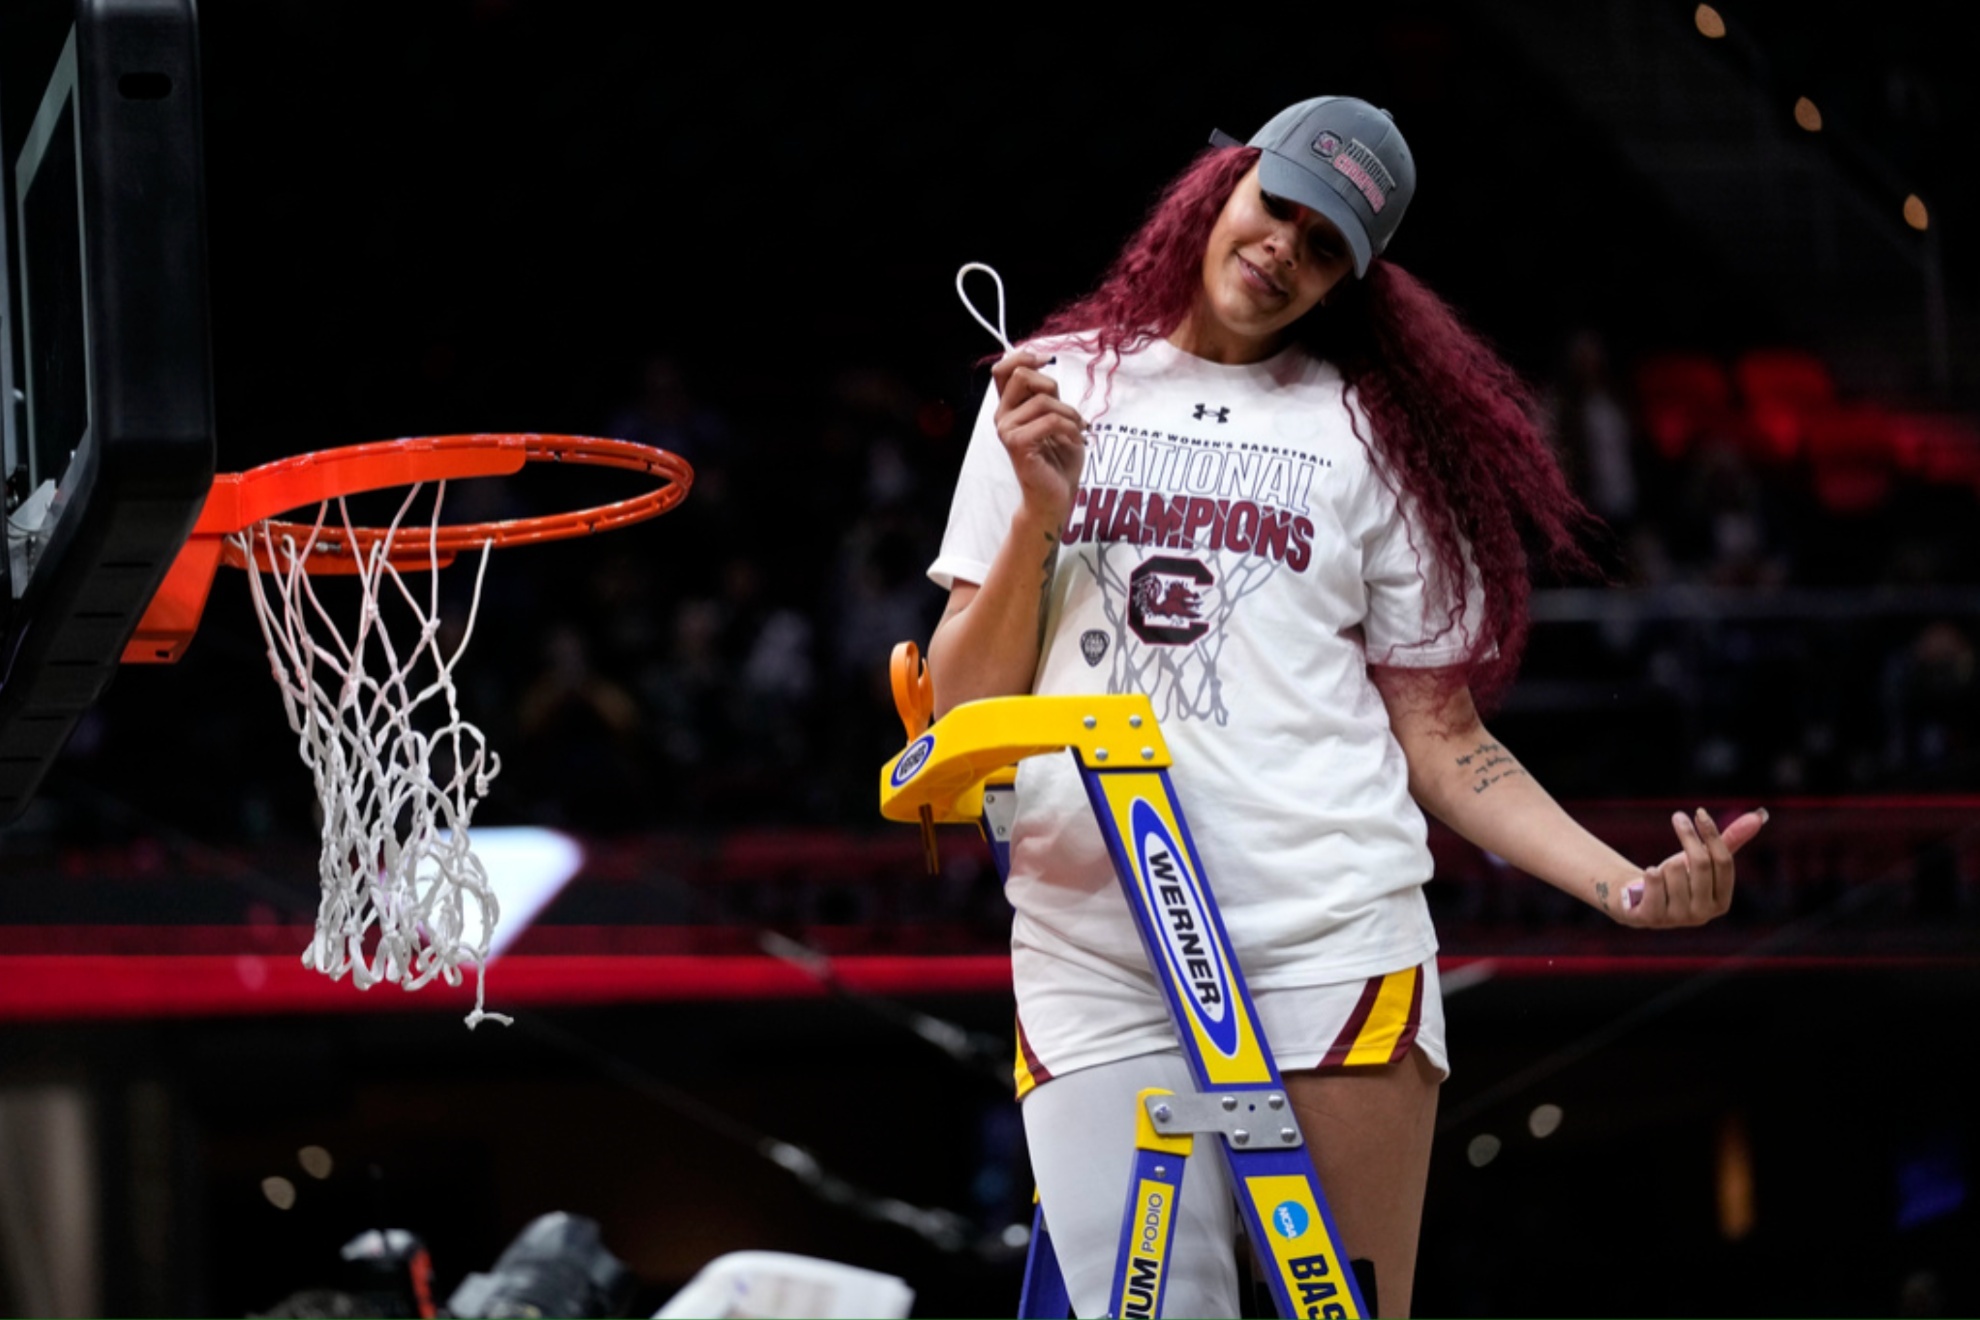 Kamilla Cardoso cutting down the net after winning the NCAA Championship.